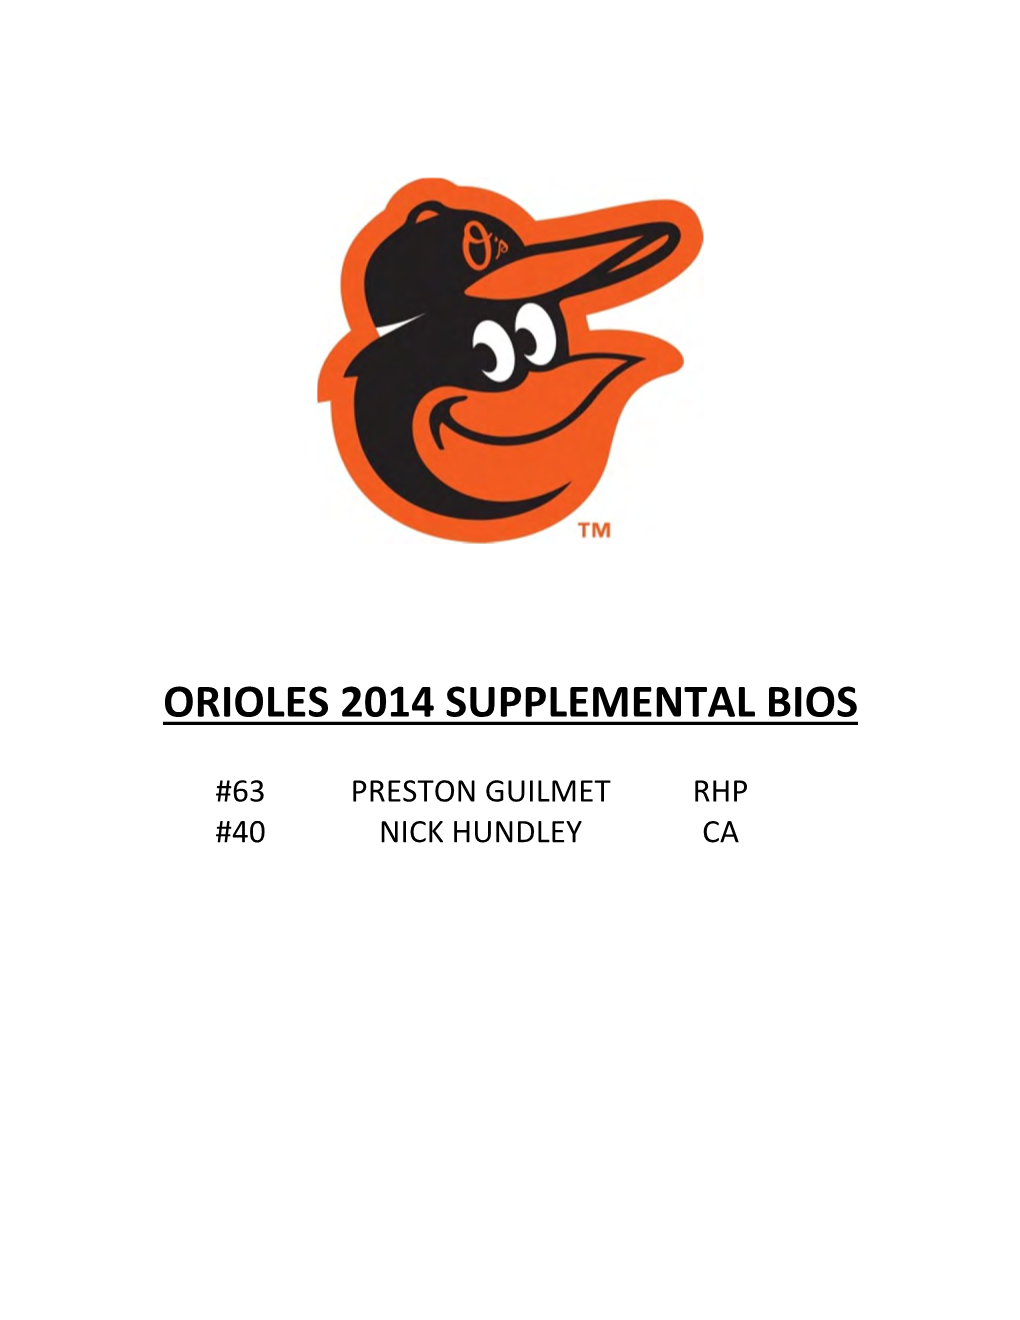 Orioles 2014 Supplemental Bios